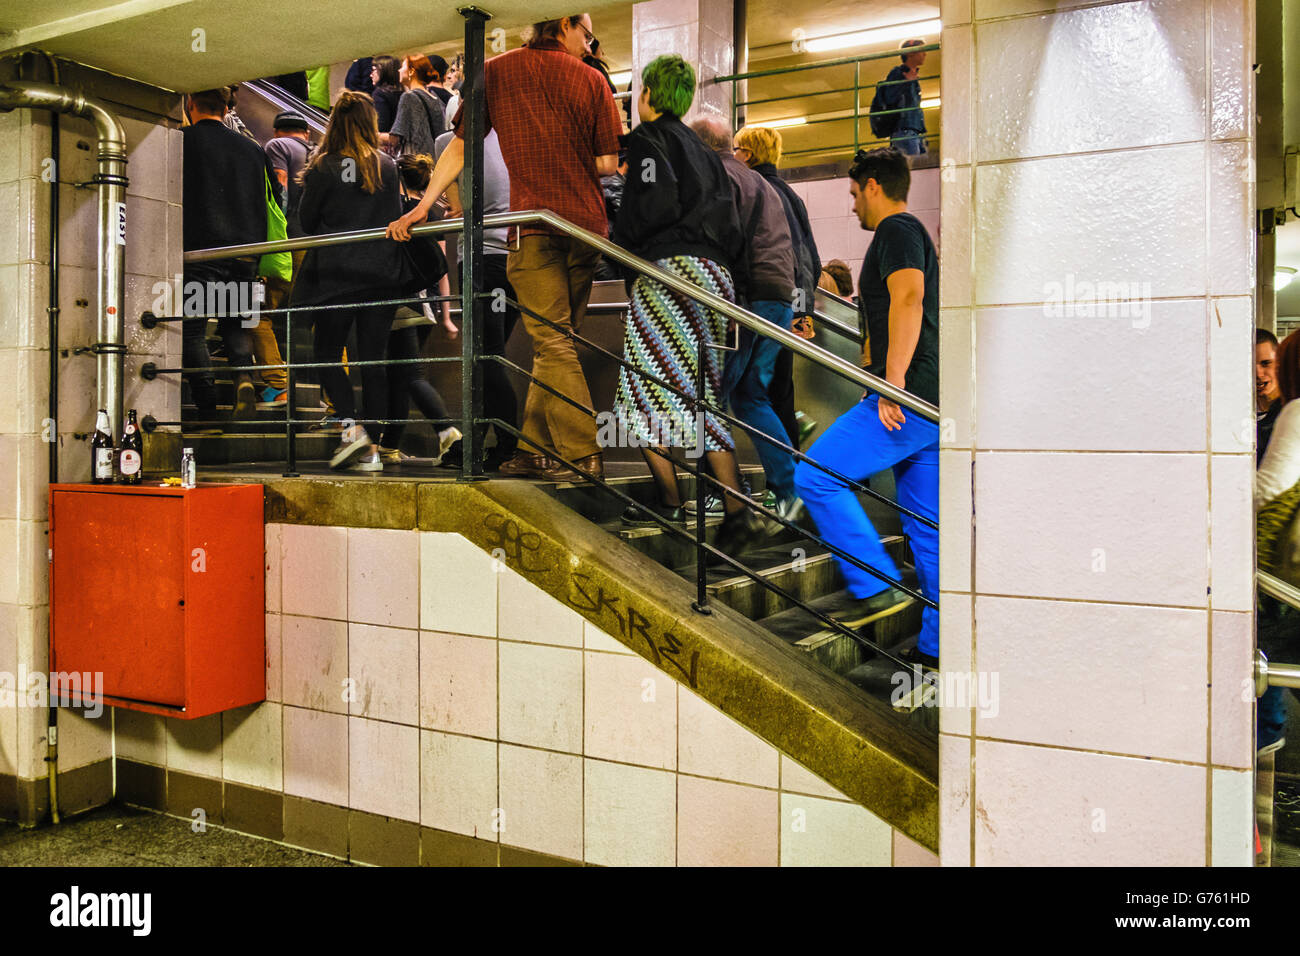 Berlin, Kreuzberg, Kottbusser Tor U-bahn Underground railway station with crowded staircase to exit Stock Photo